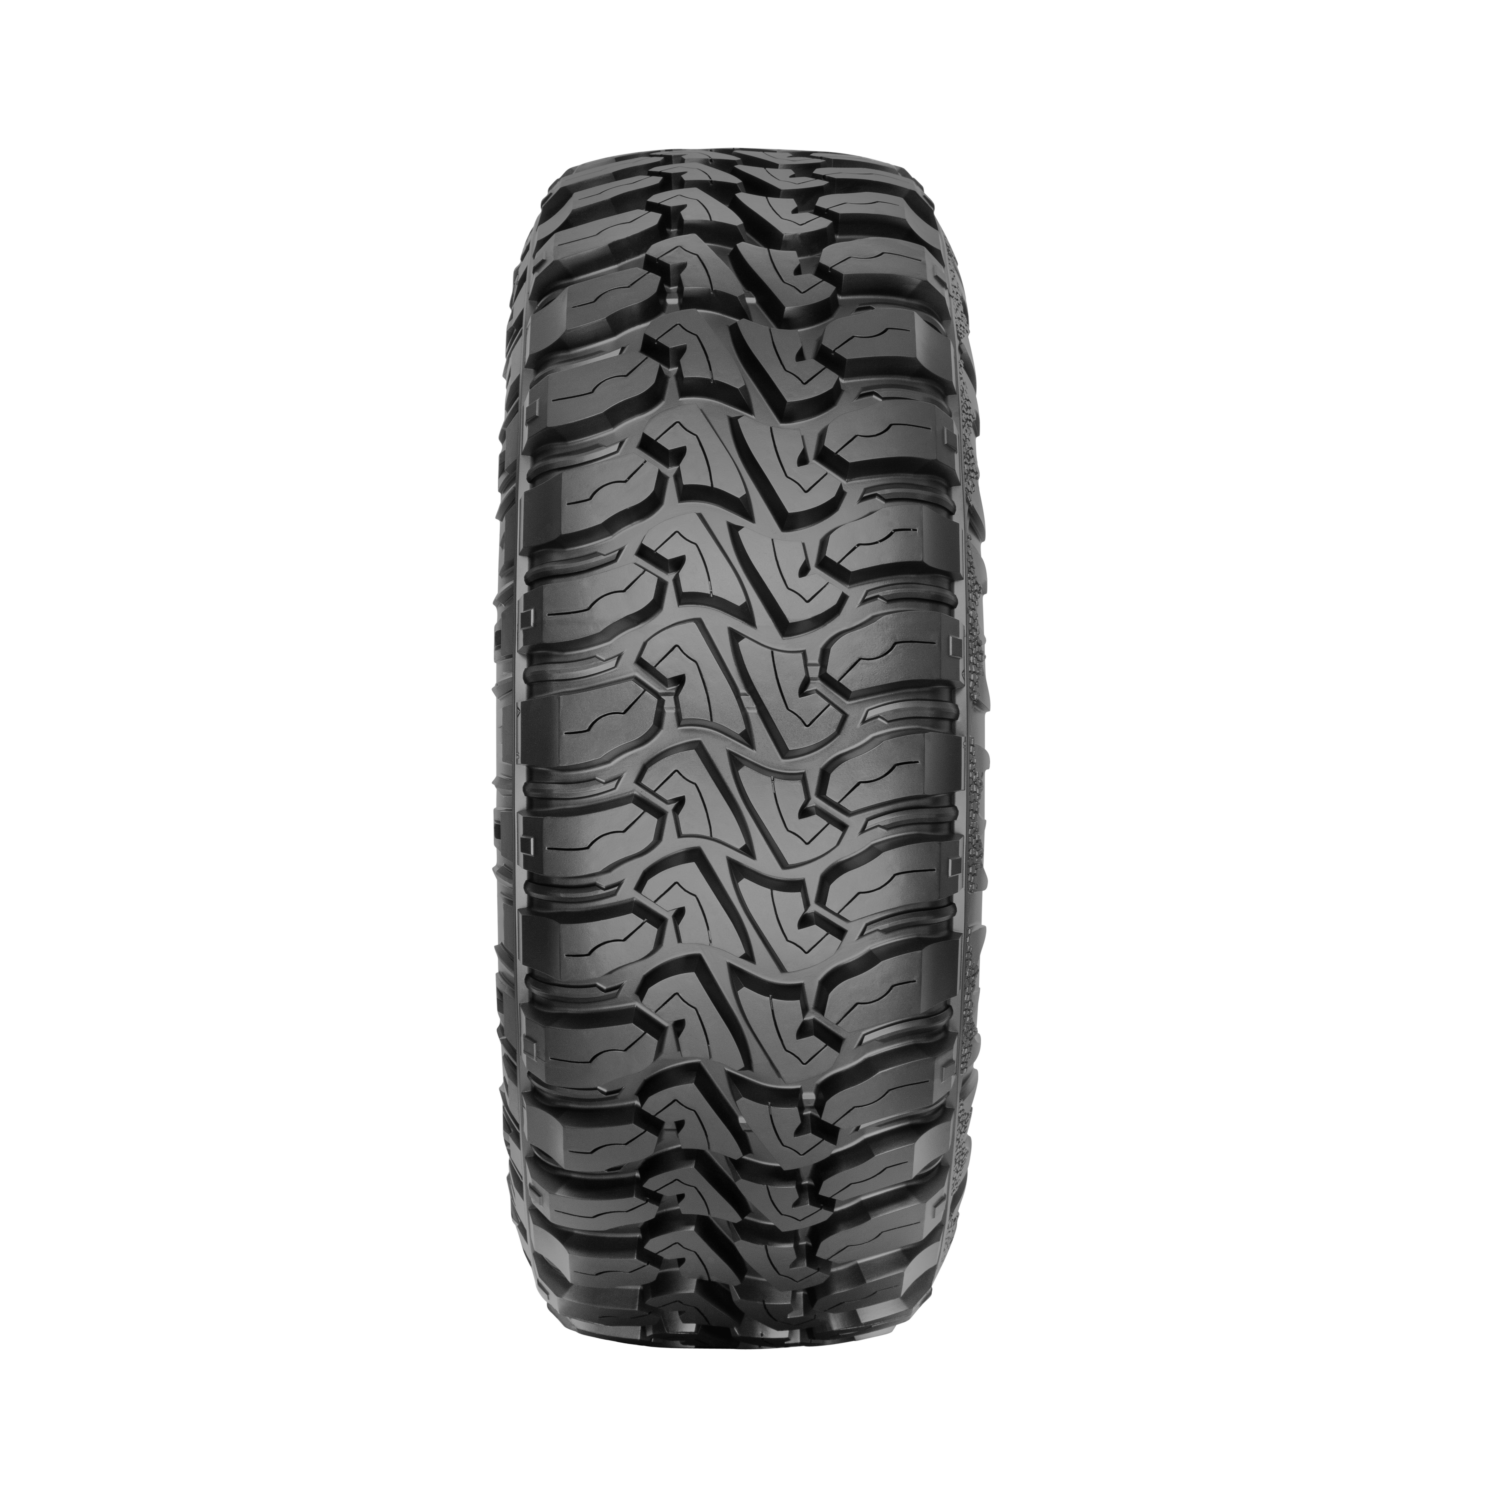 View of NEXEN Roadian MTX RM7 mud terrain tyre tread